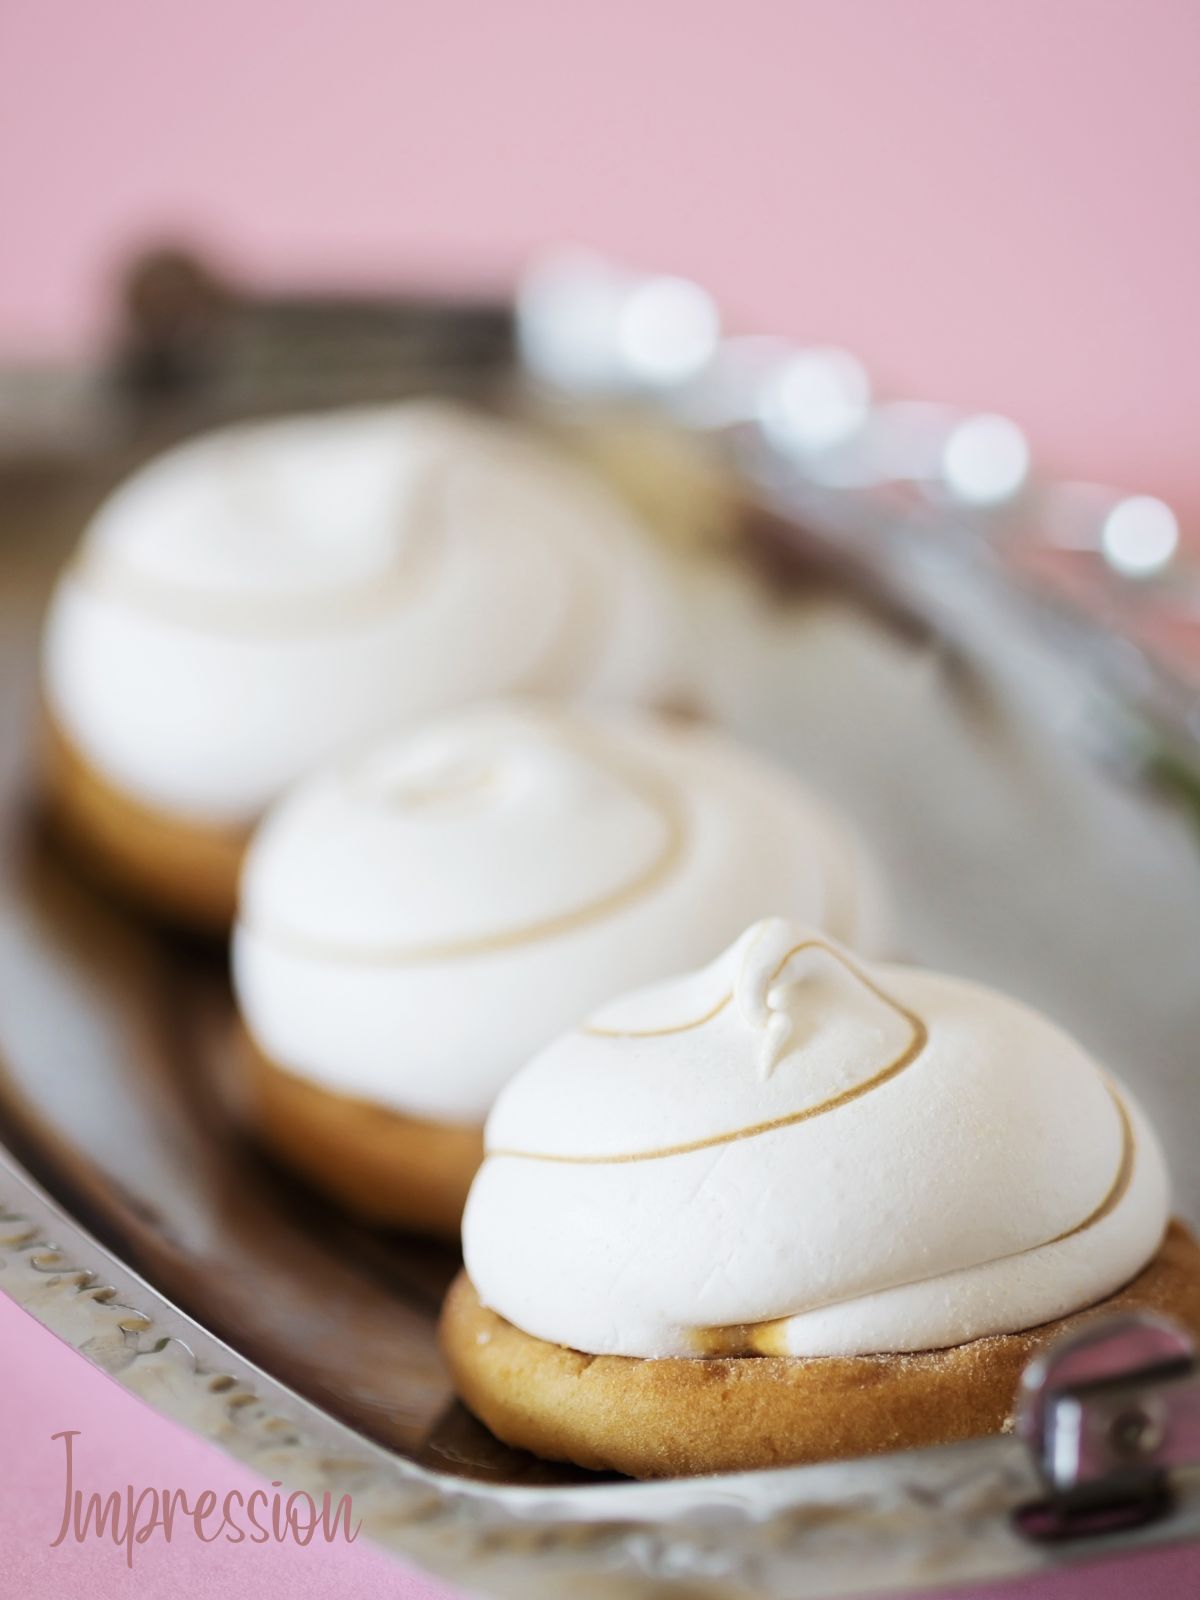 Vanilla Cookies & Marshmallow · Duftwachs